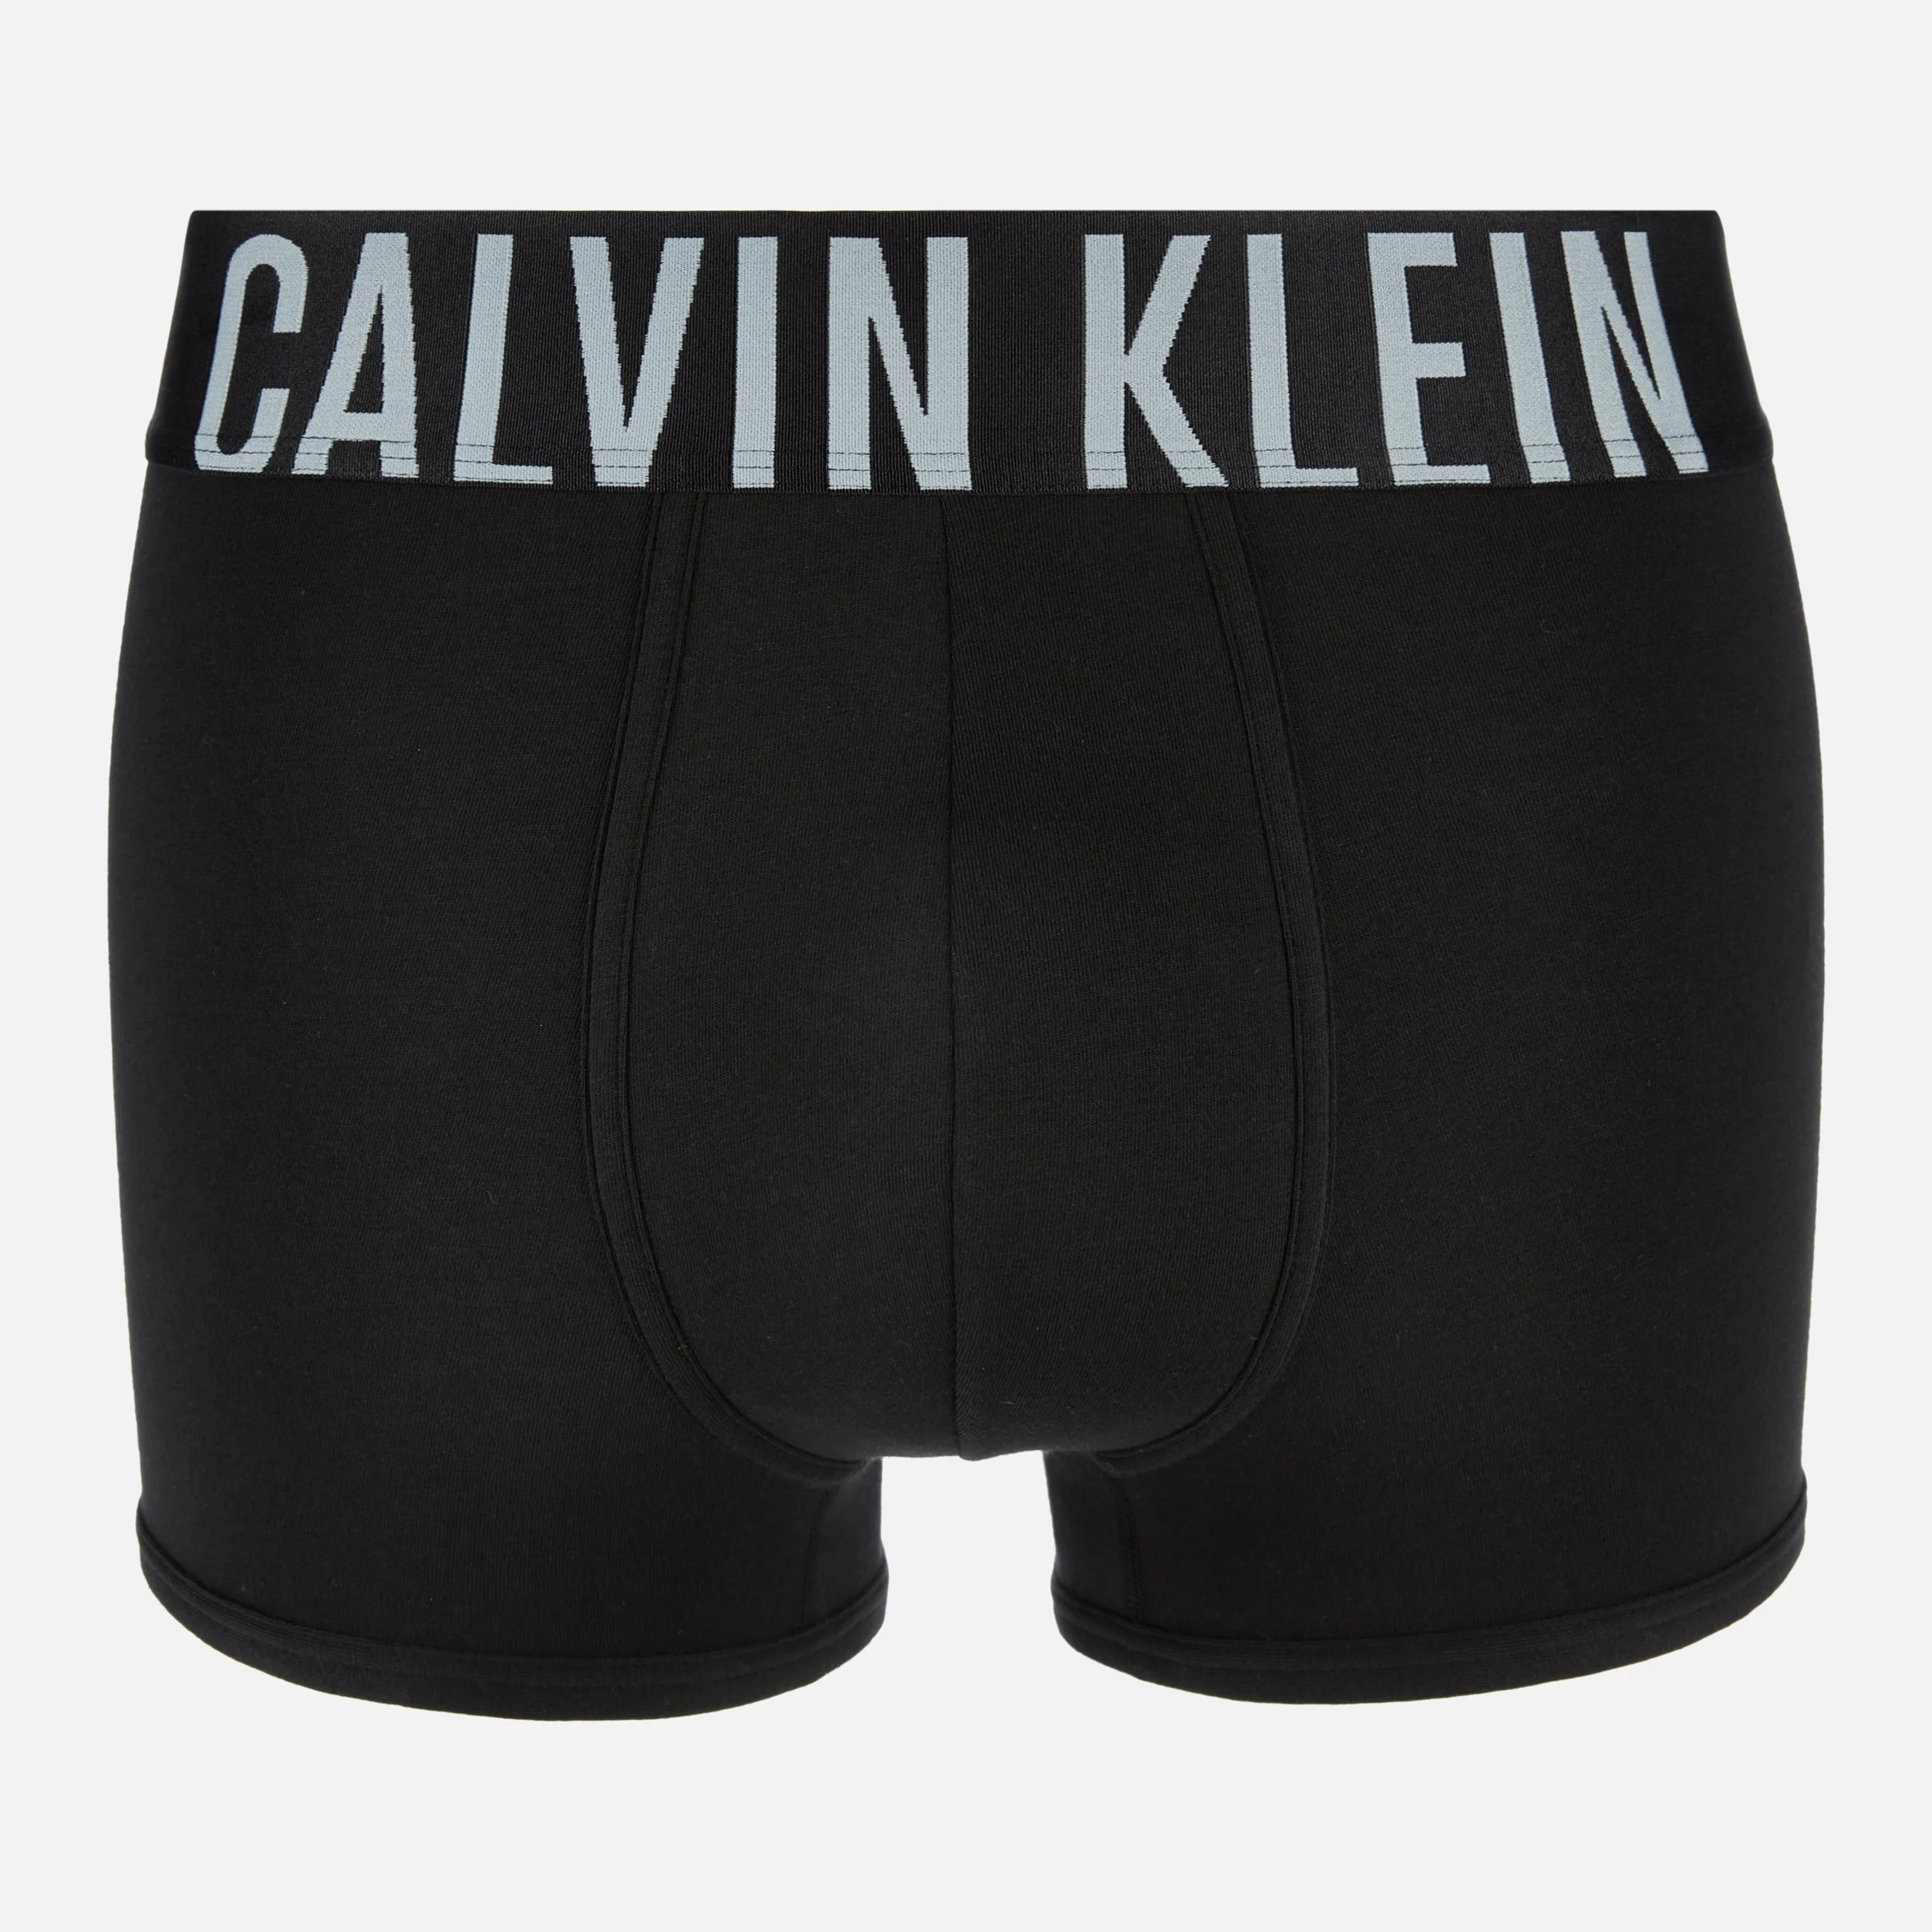 Calvin Klein Men's Intense Power 2-Pack Boxer Briefs - Black Image 1